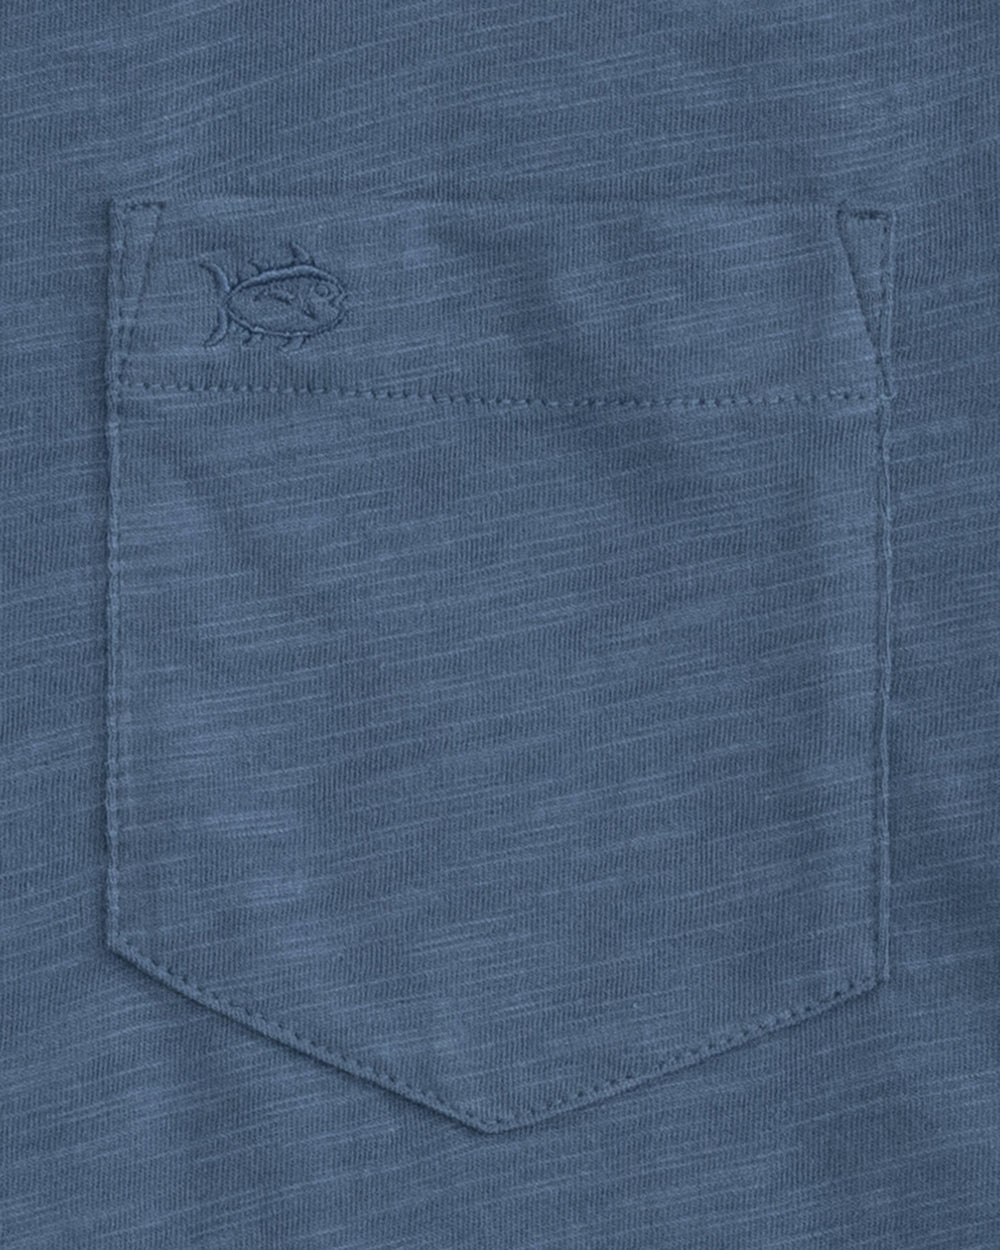 The pocket of the Men's Sun Farer Long Sleeve T-Shirt by Southern Tide - Dark Denim